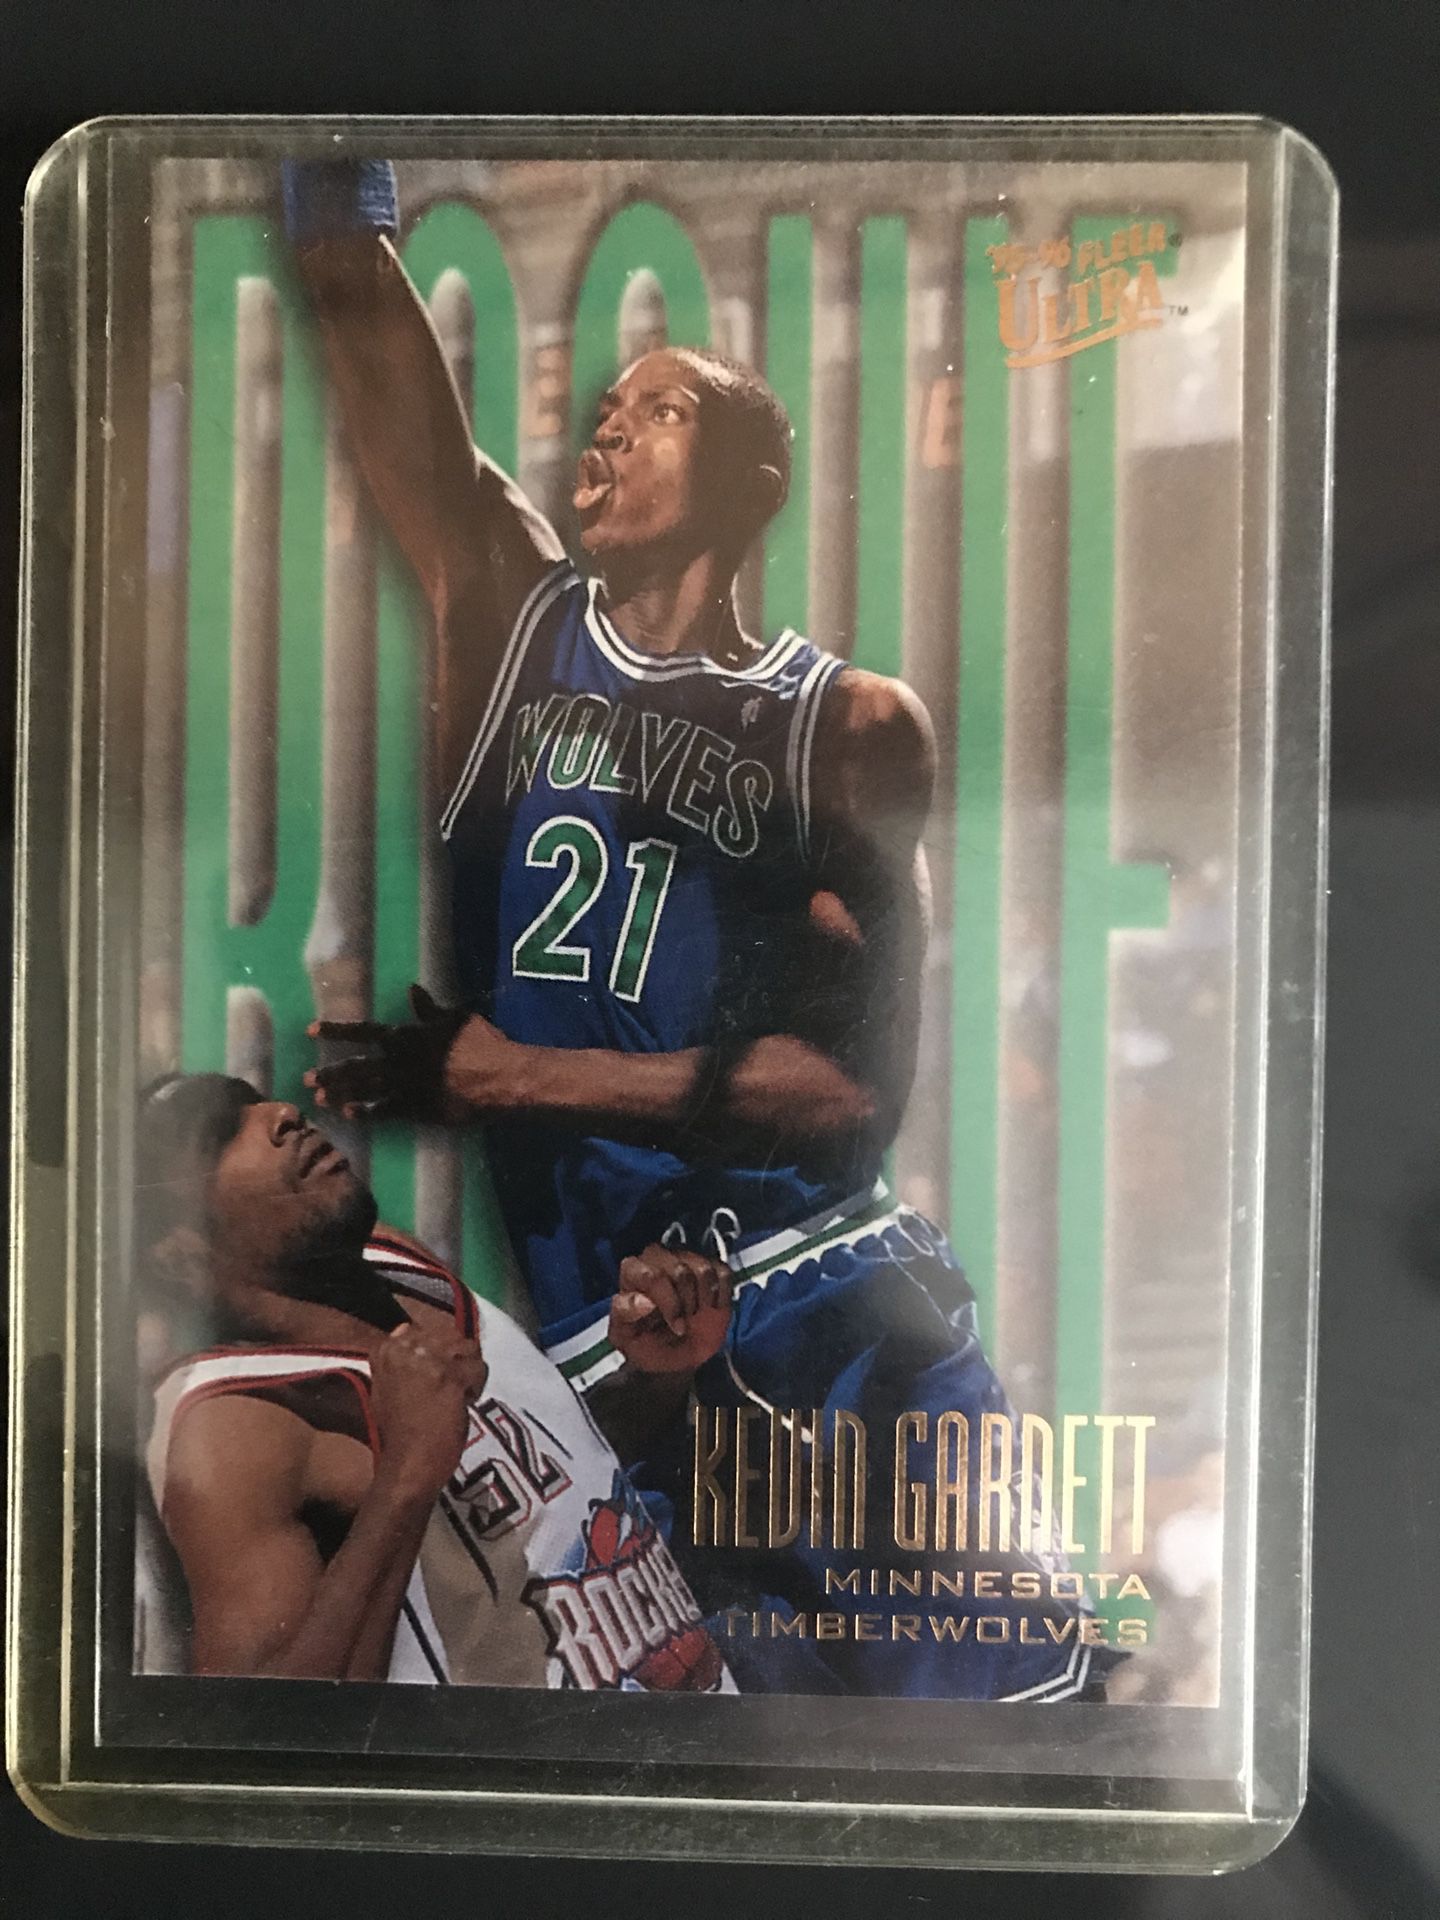 Kevin Garnett Rookie card for Sale in Island Lake, IL - OfferUp